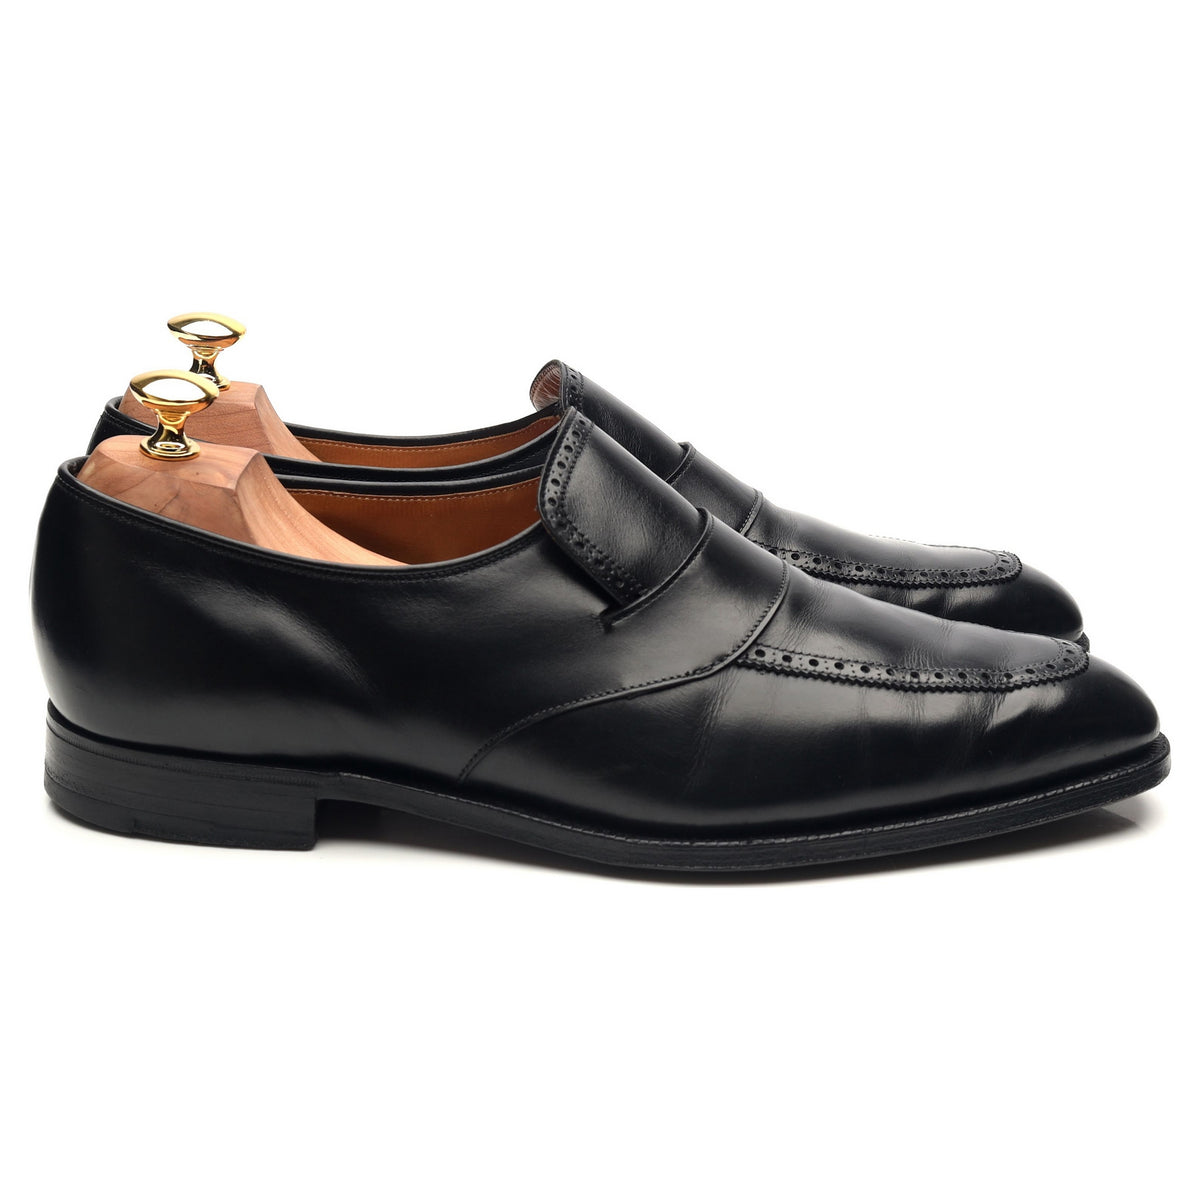 Black Leather Slip On Loafers UK 10 E